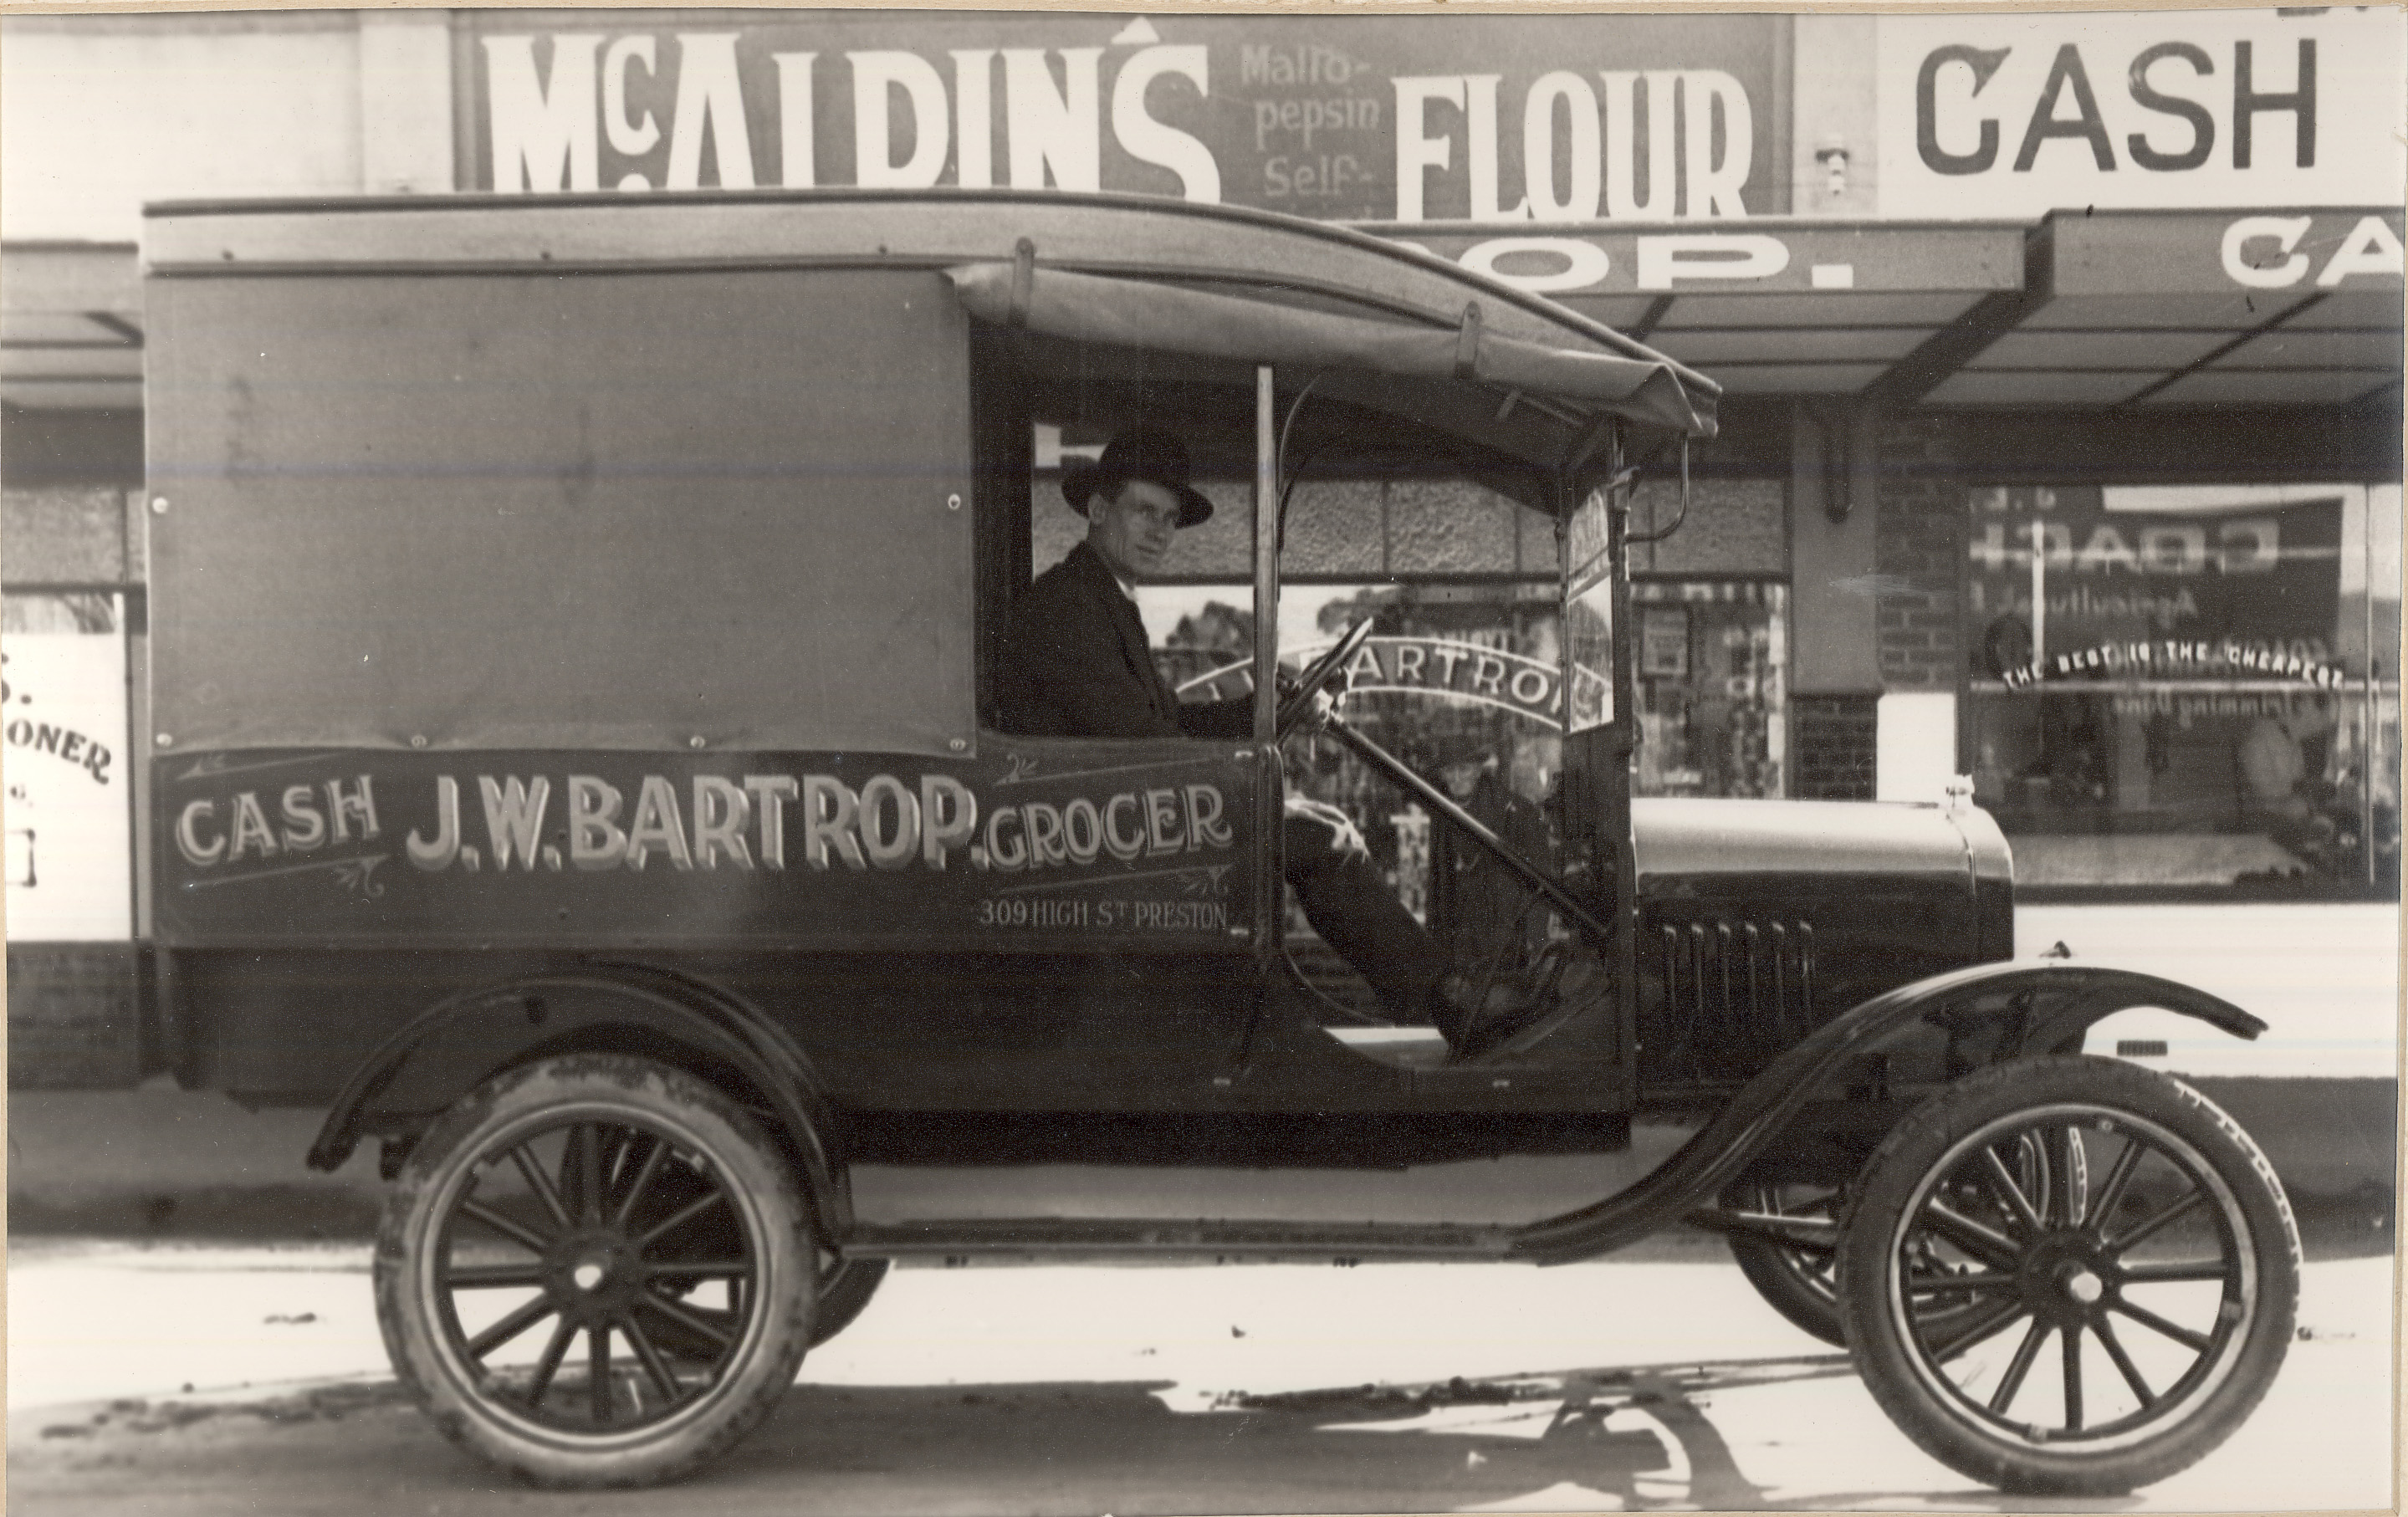 Image of J.W. Bartrop Grocery truck, High Street Preston.